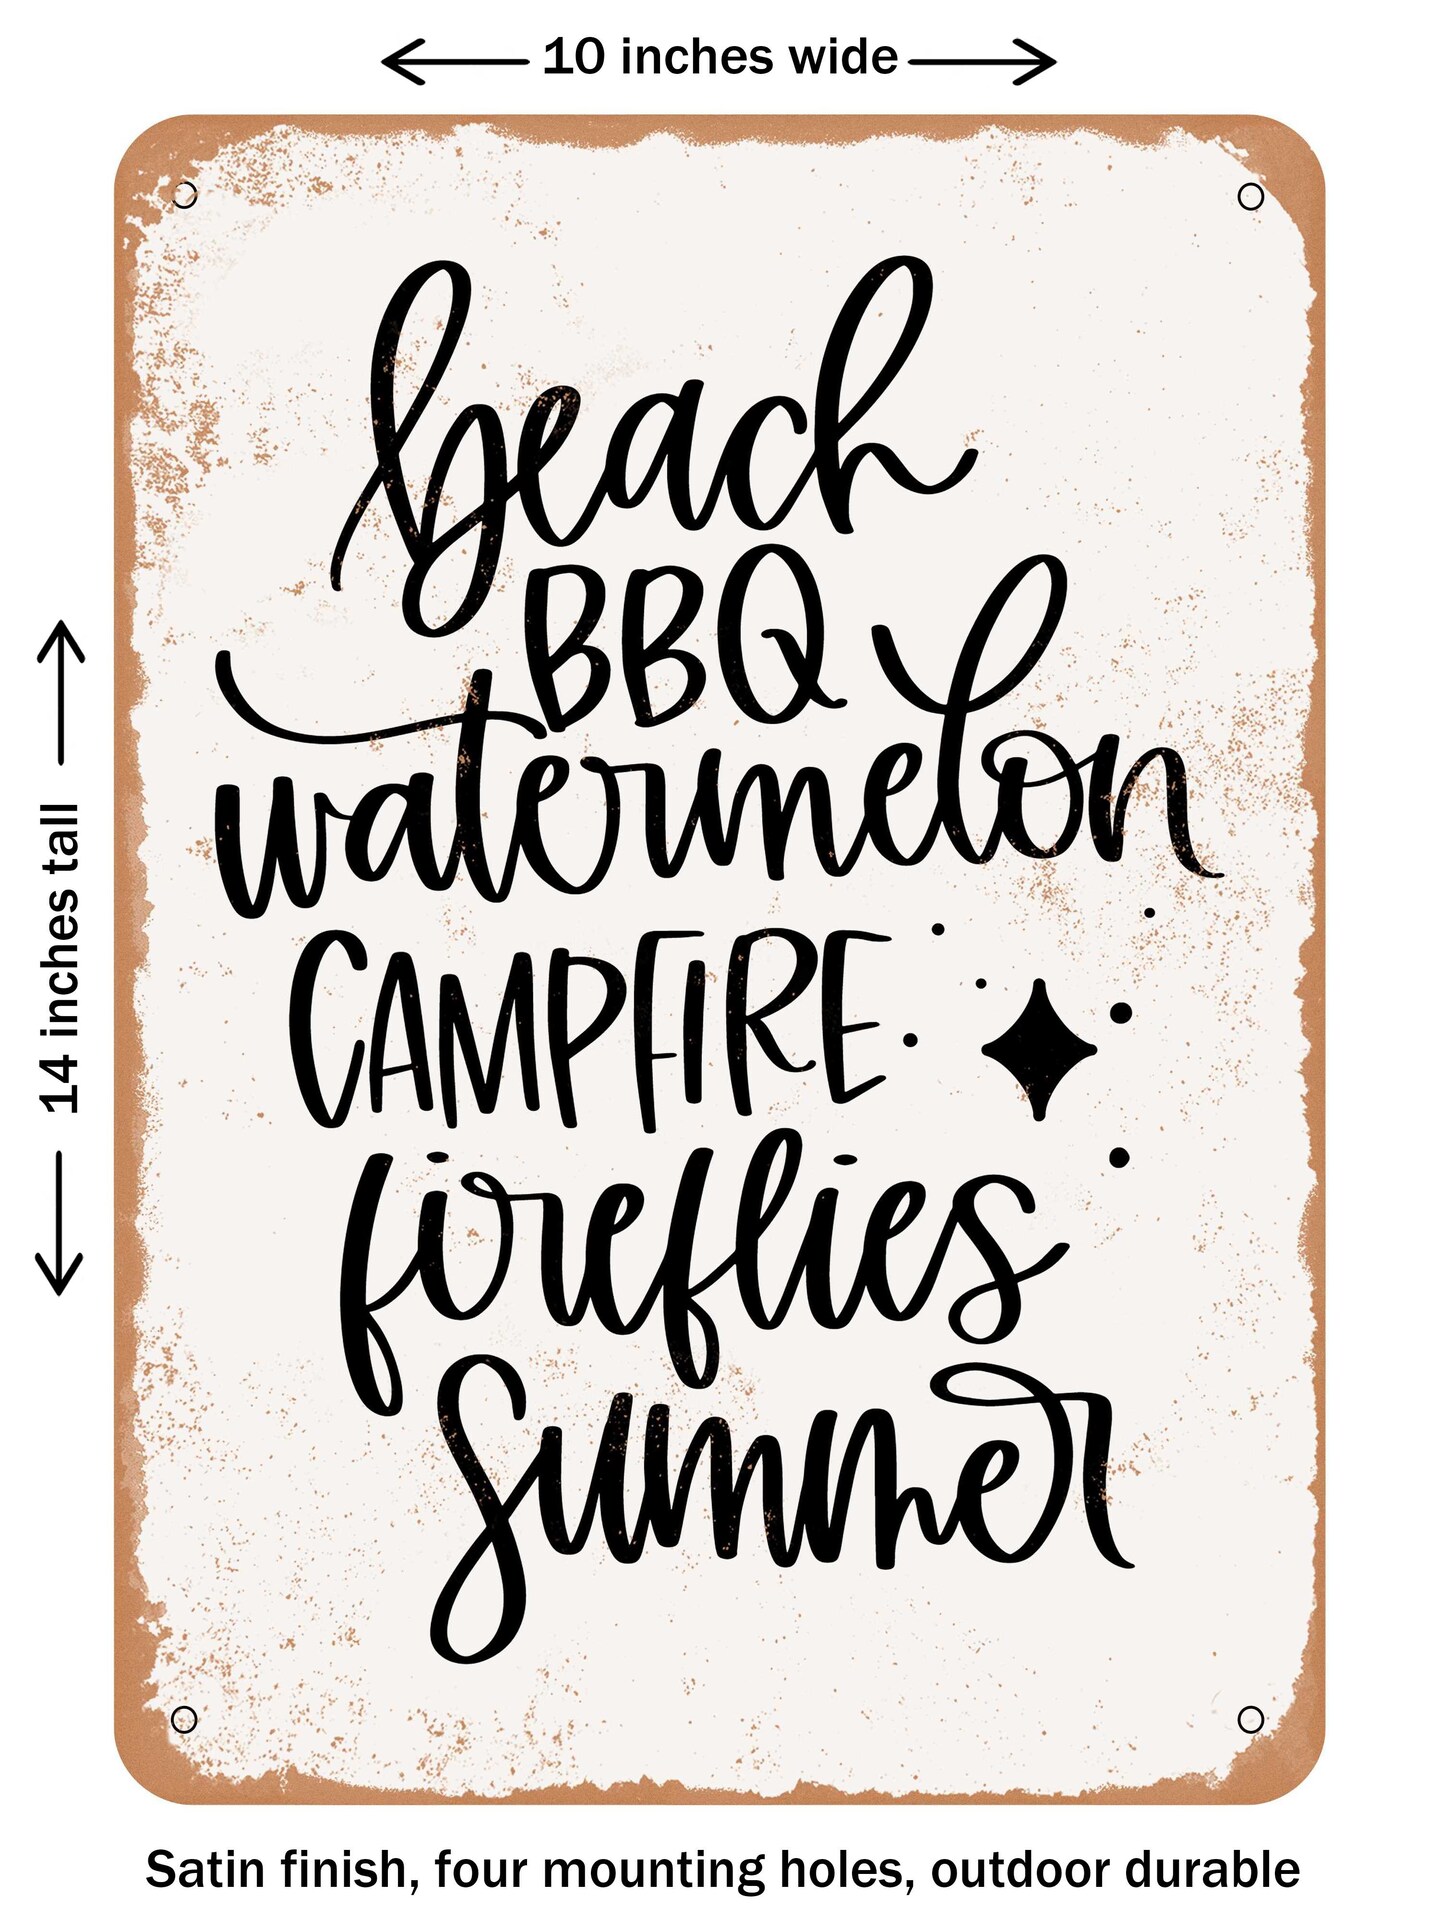 DECORATIVE METAL SIGN - Beach BBQ Watermelon Campfire Fireflies Summer  - Vintage Rusty Look